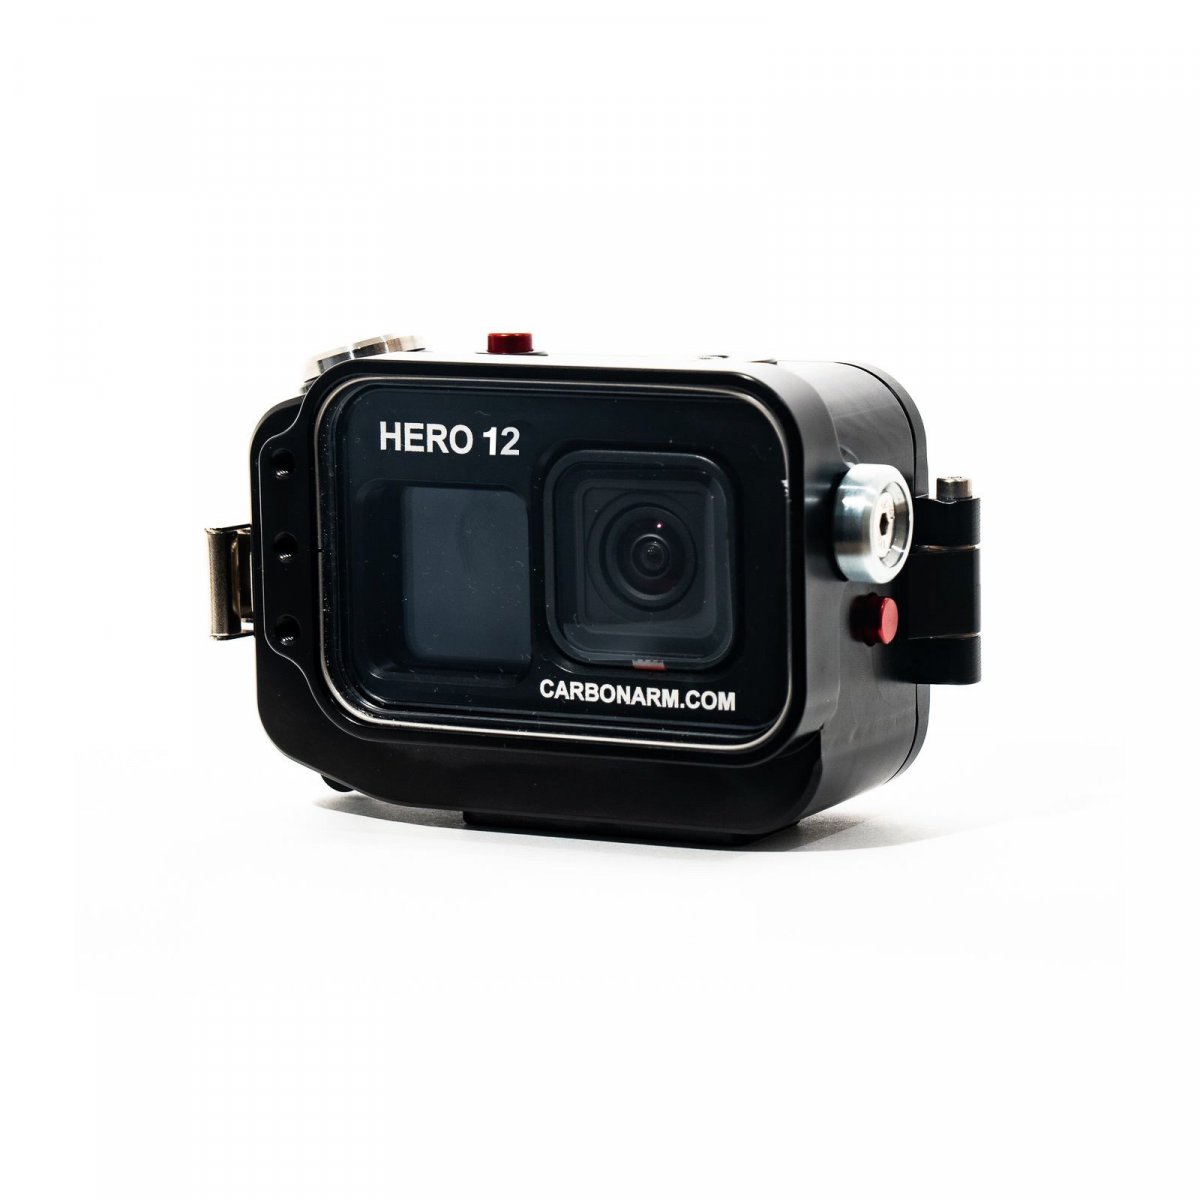 Caisson de plongée EasyDive V3 pour GoPro HERO12, HERO11, HERO10